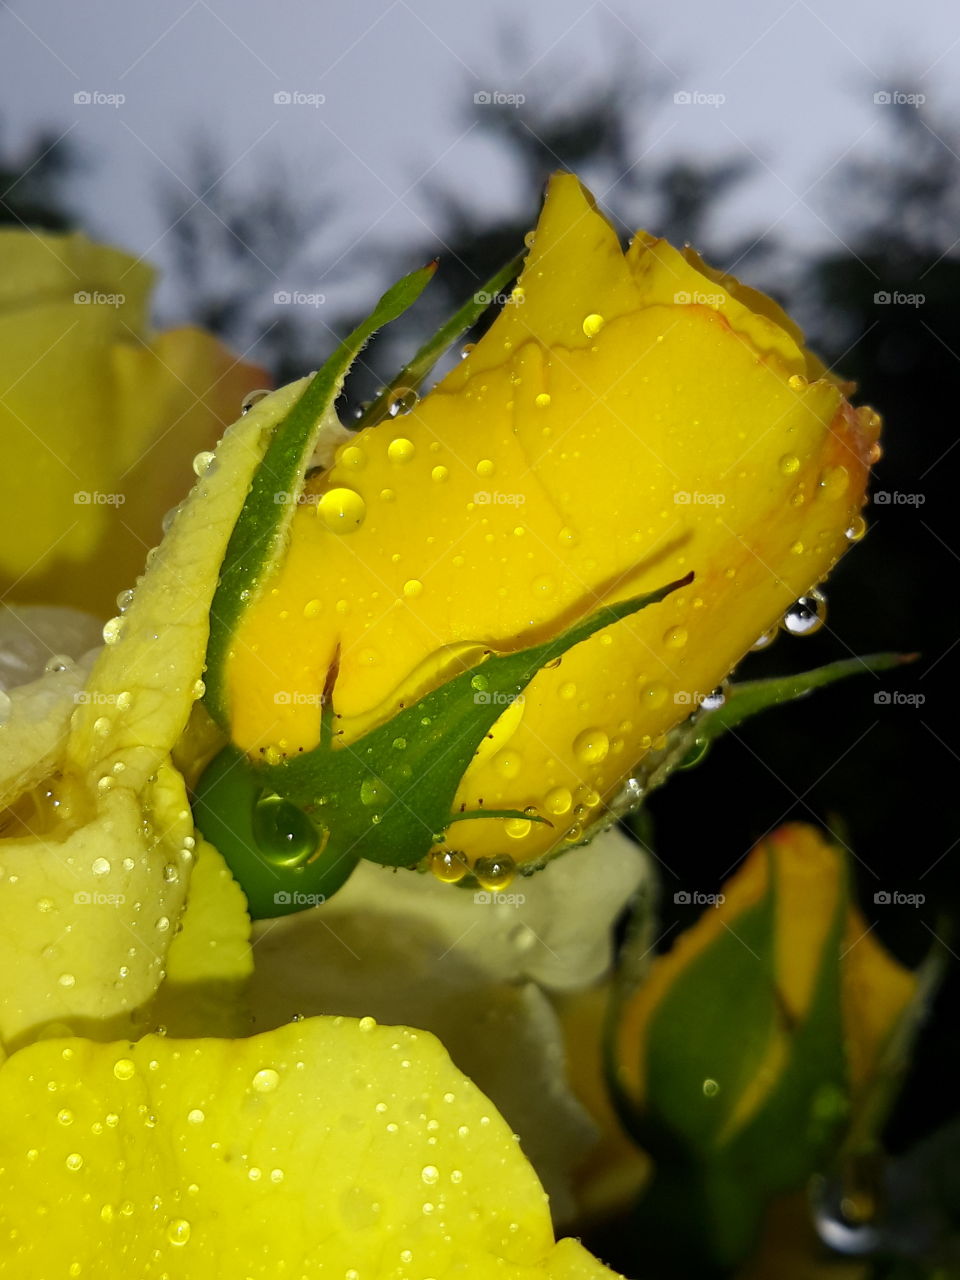 Yellow ewning rose in drops